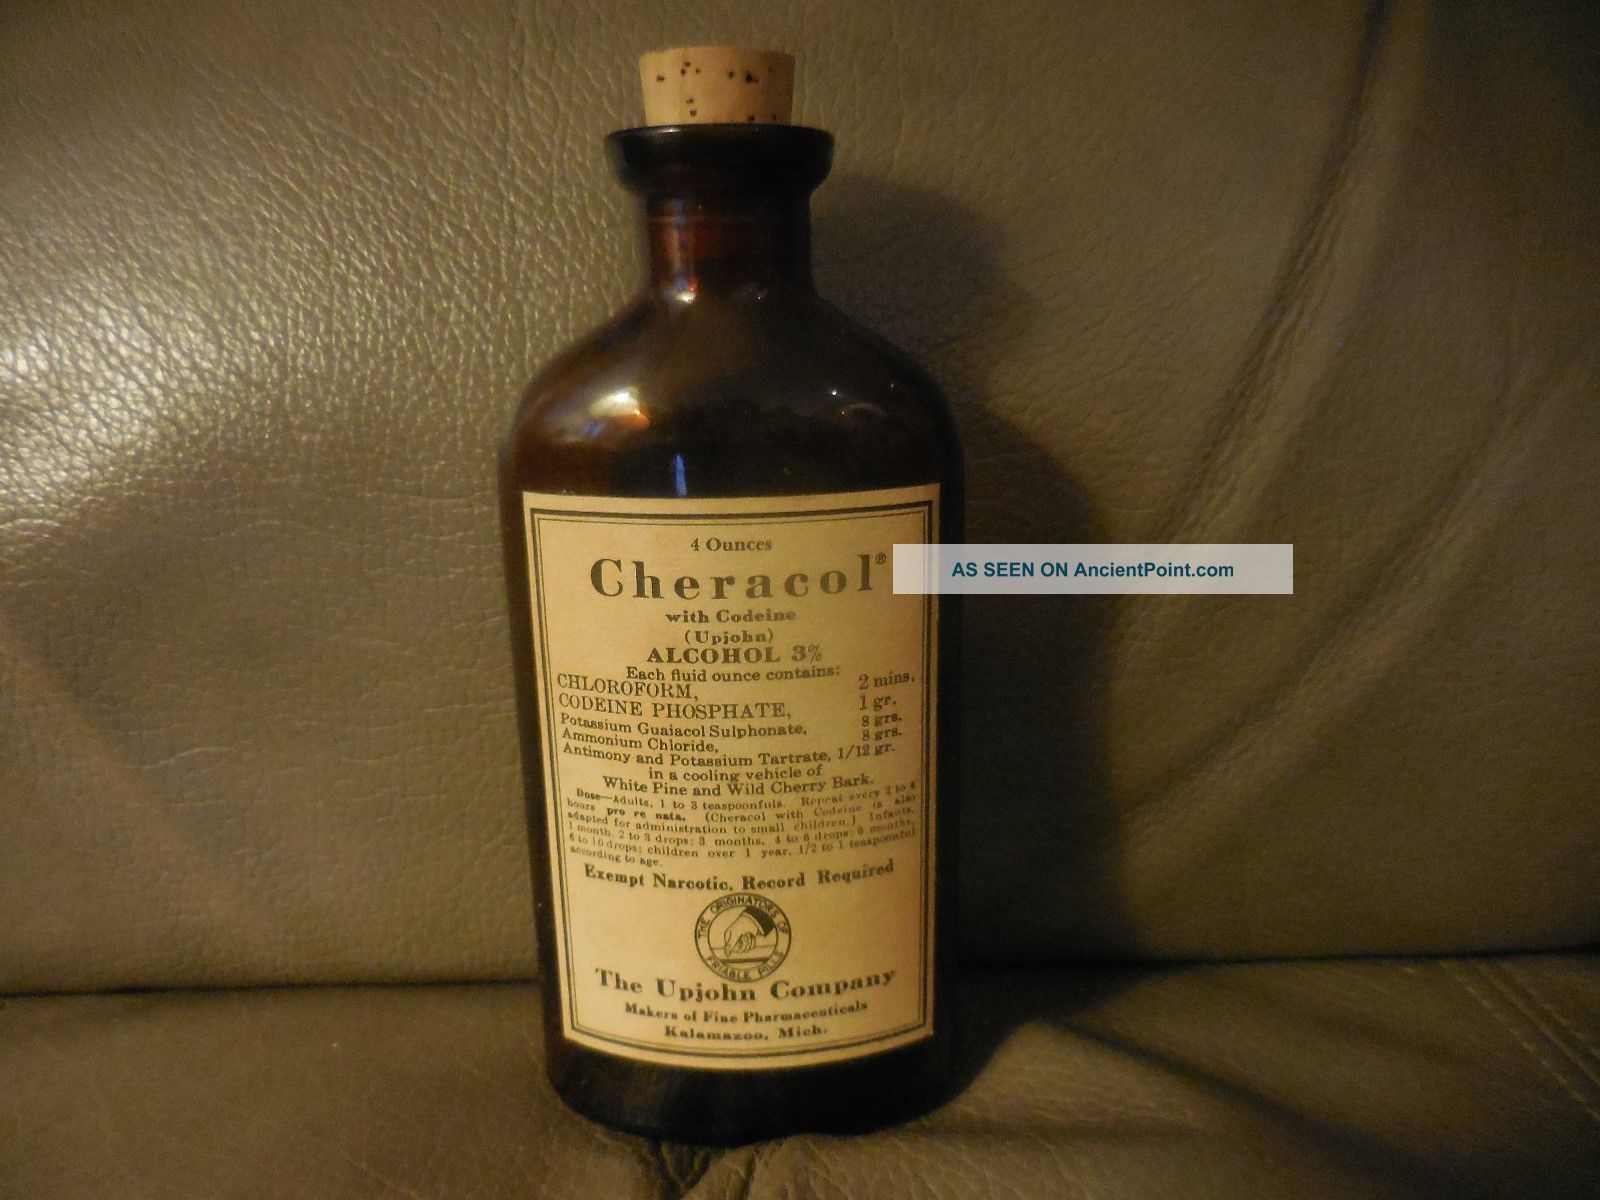 Vintage Upjohn Pharmacy Medical Bottle Label Cheracol With Codeine. Bottles & Jars photo